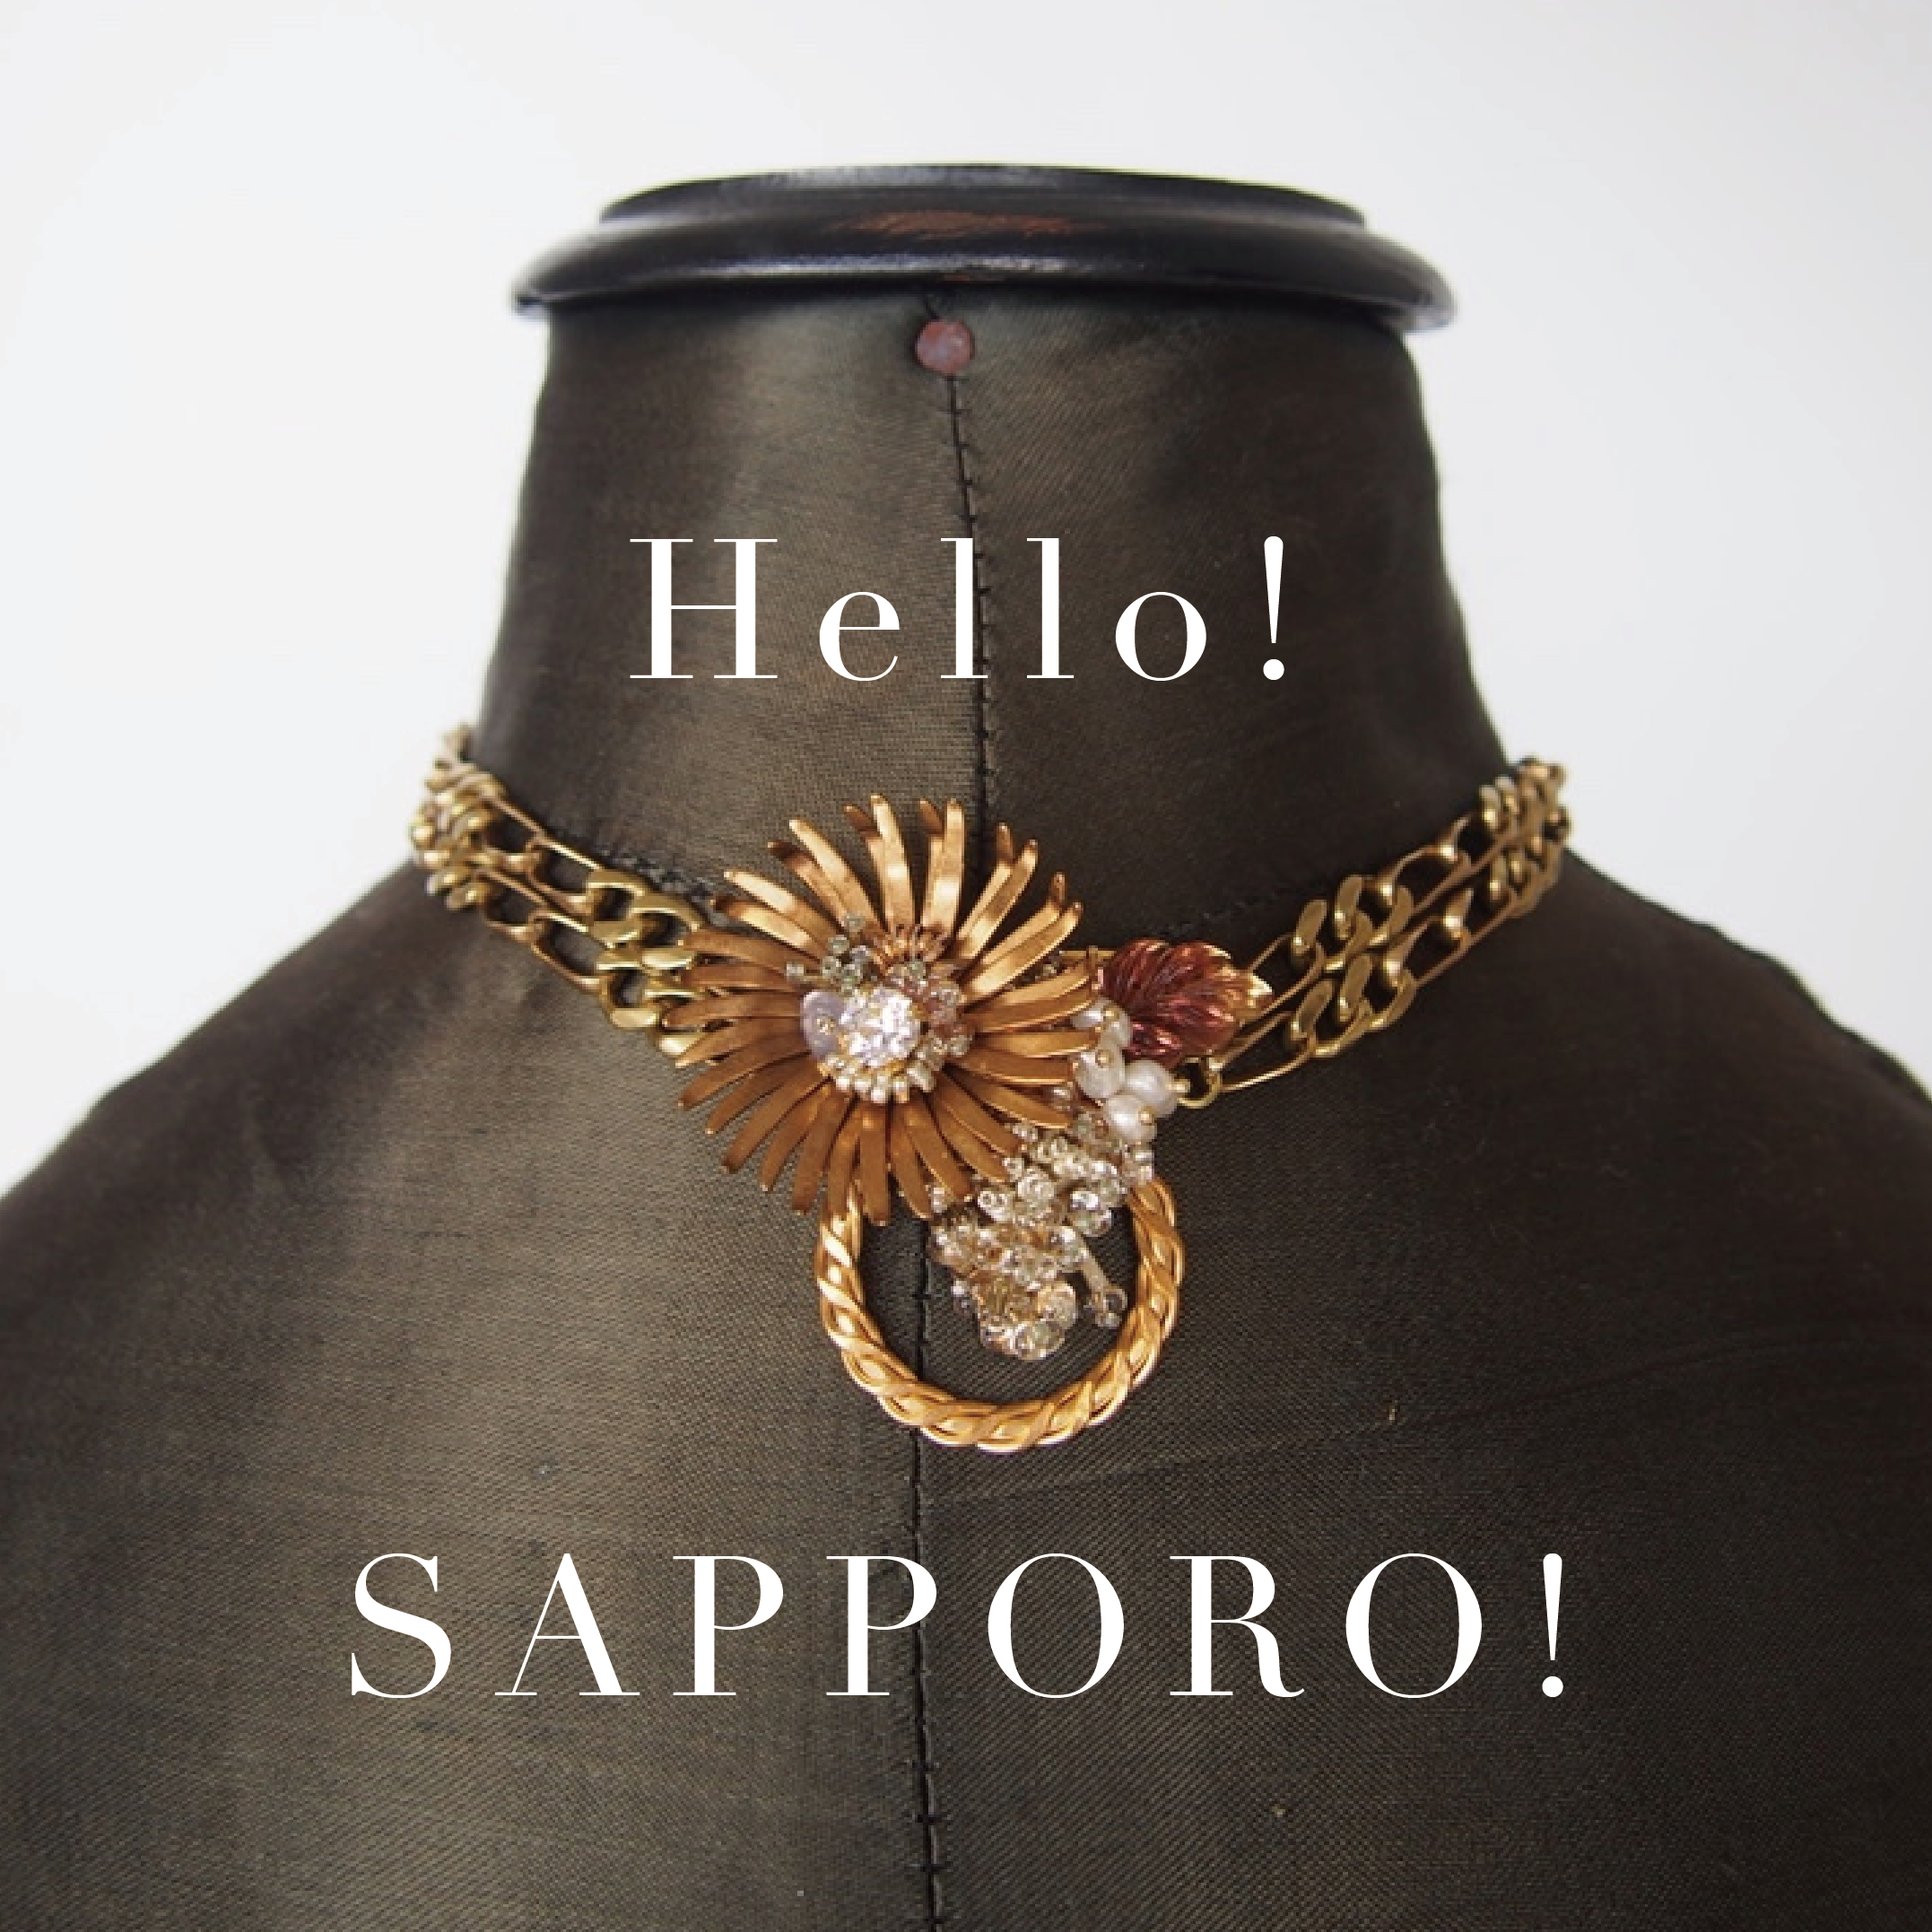 【 HELLO ! SAPPORO! 】POPUP SHOP開催のおしらせ in 札幌